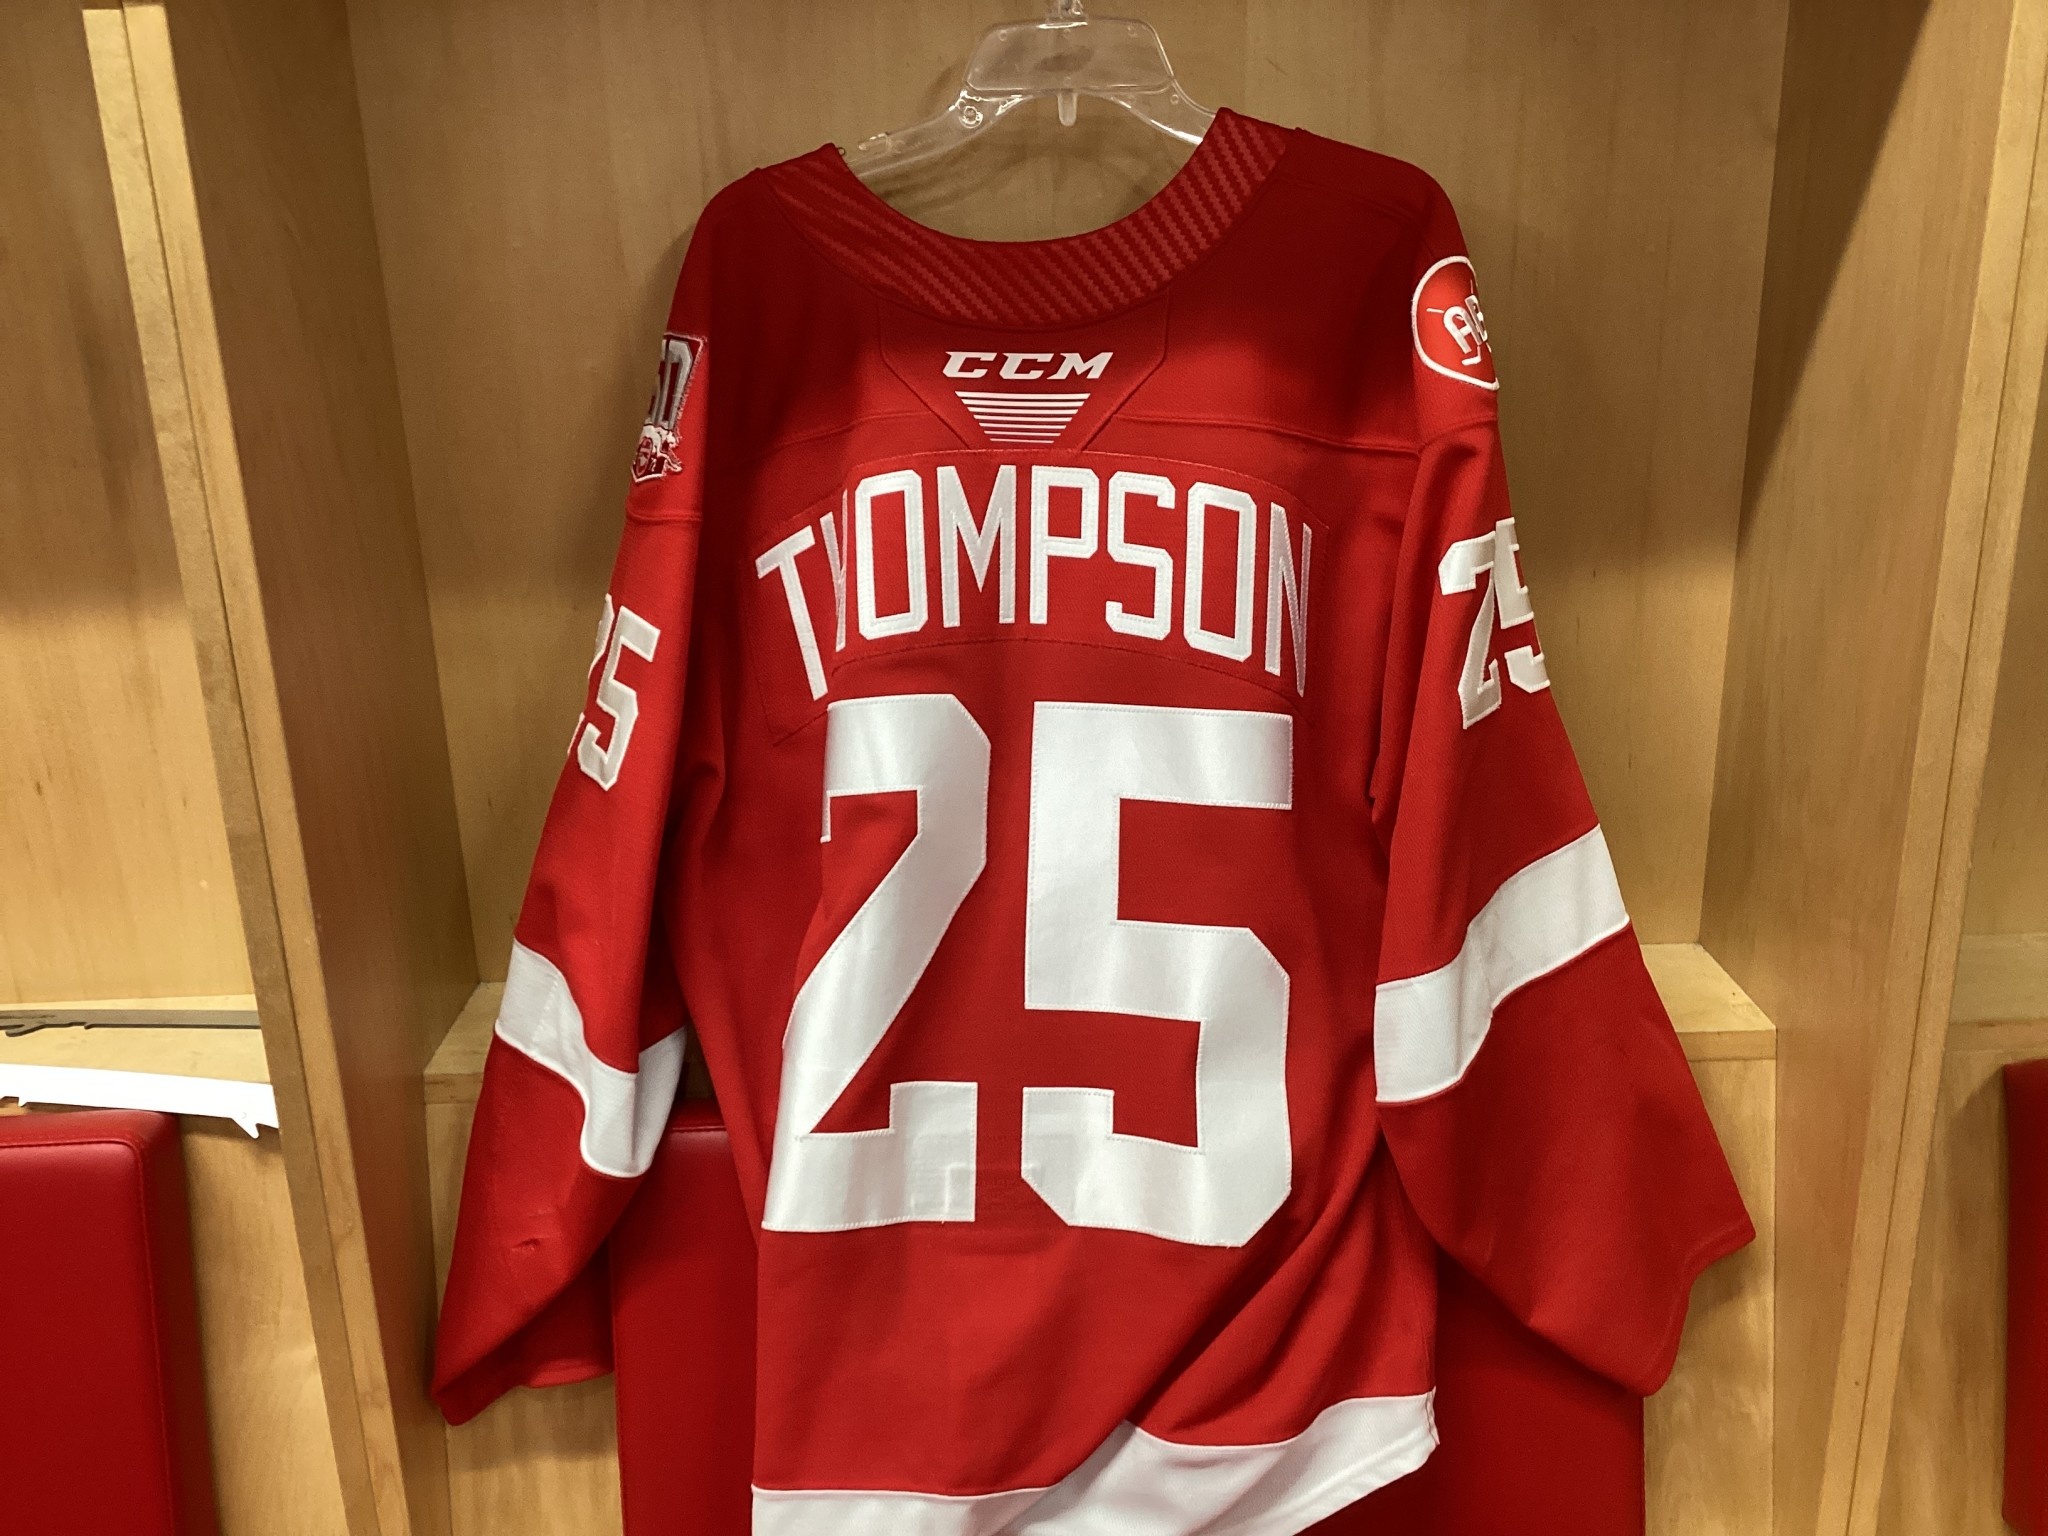 Jack Thompson 21/22 Red Game Worn Jersey